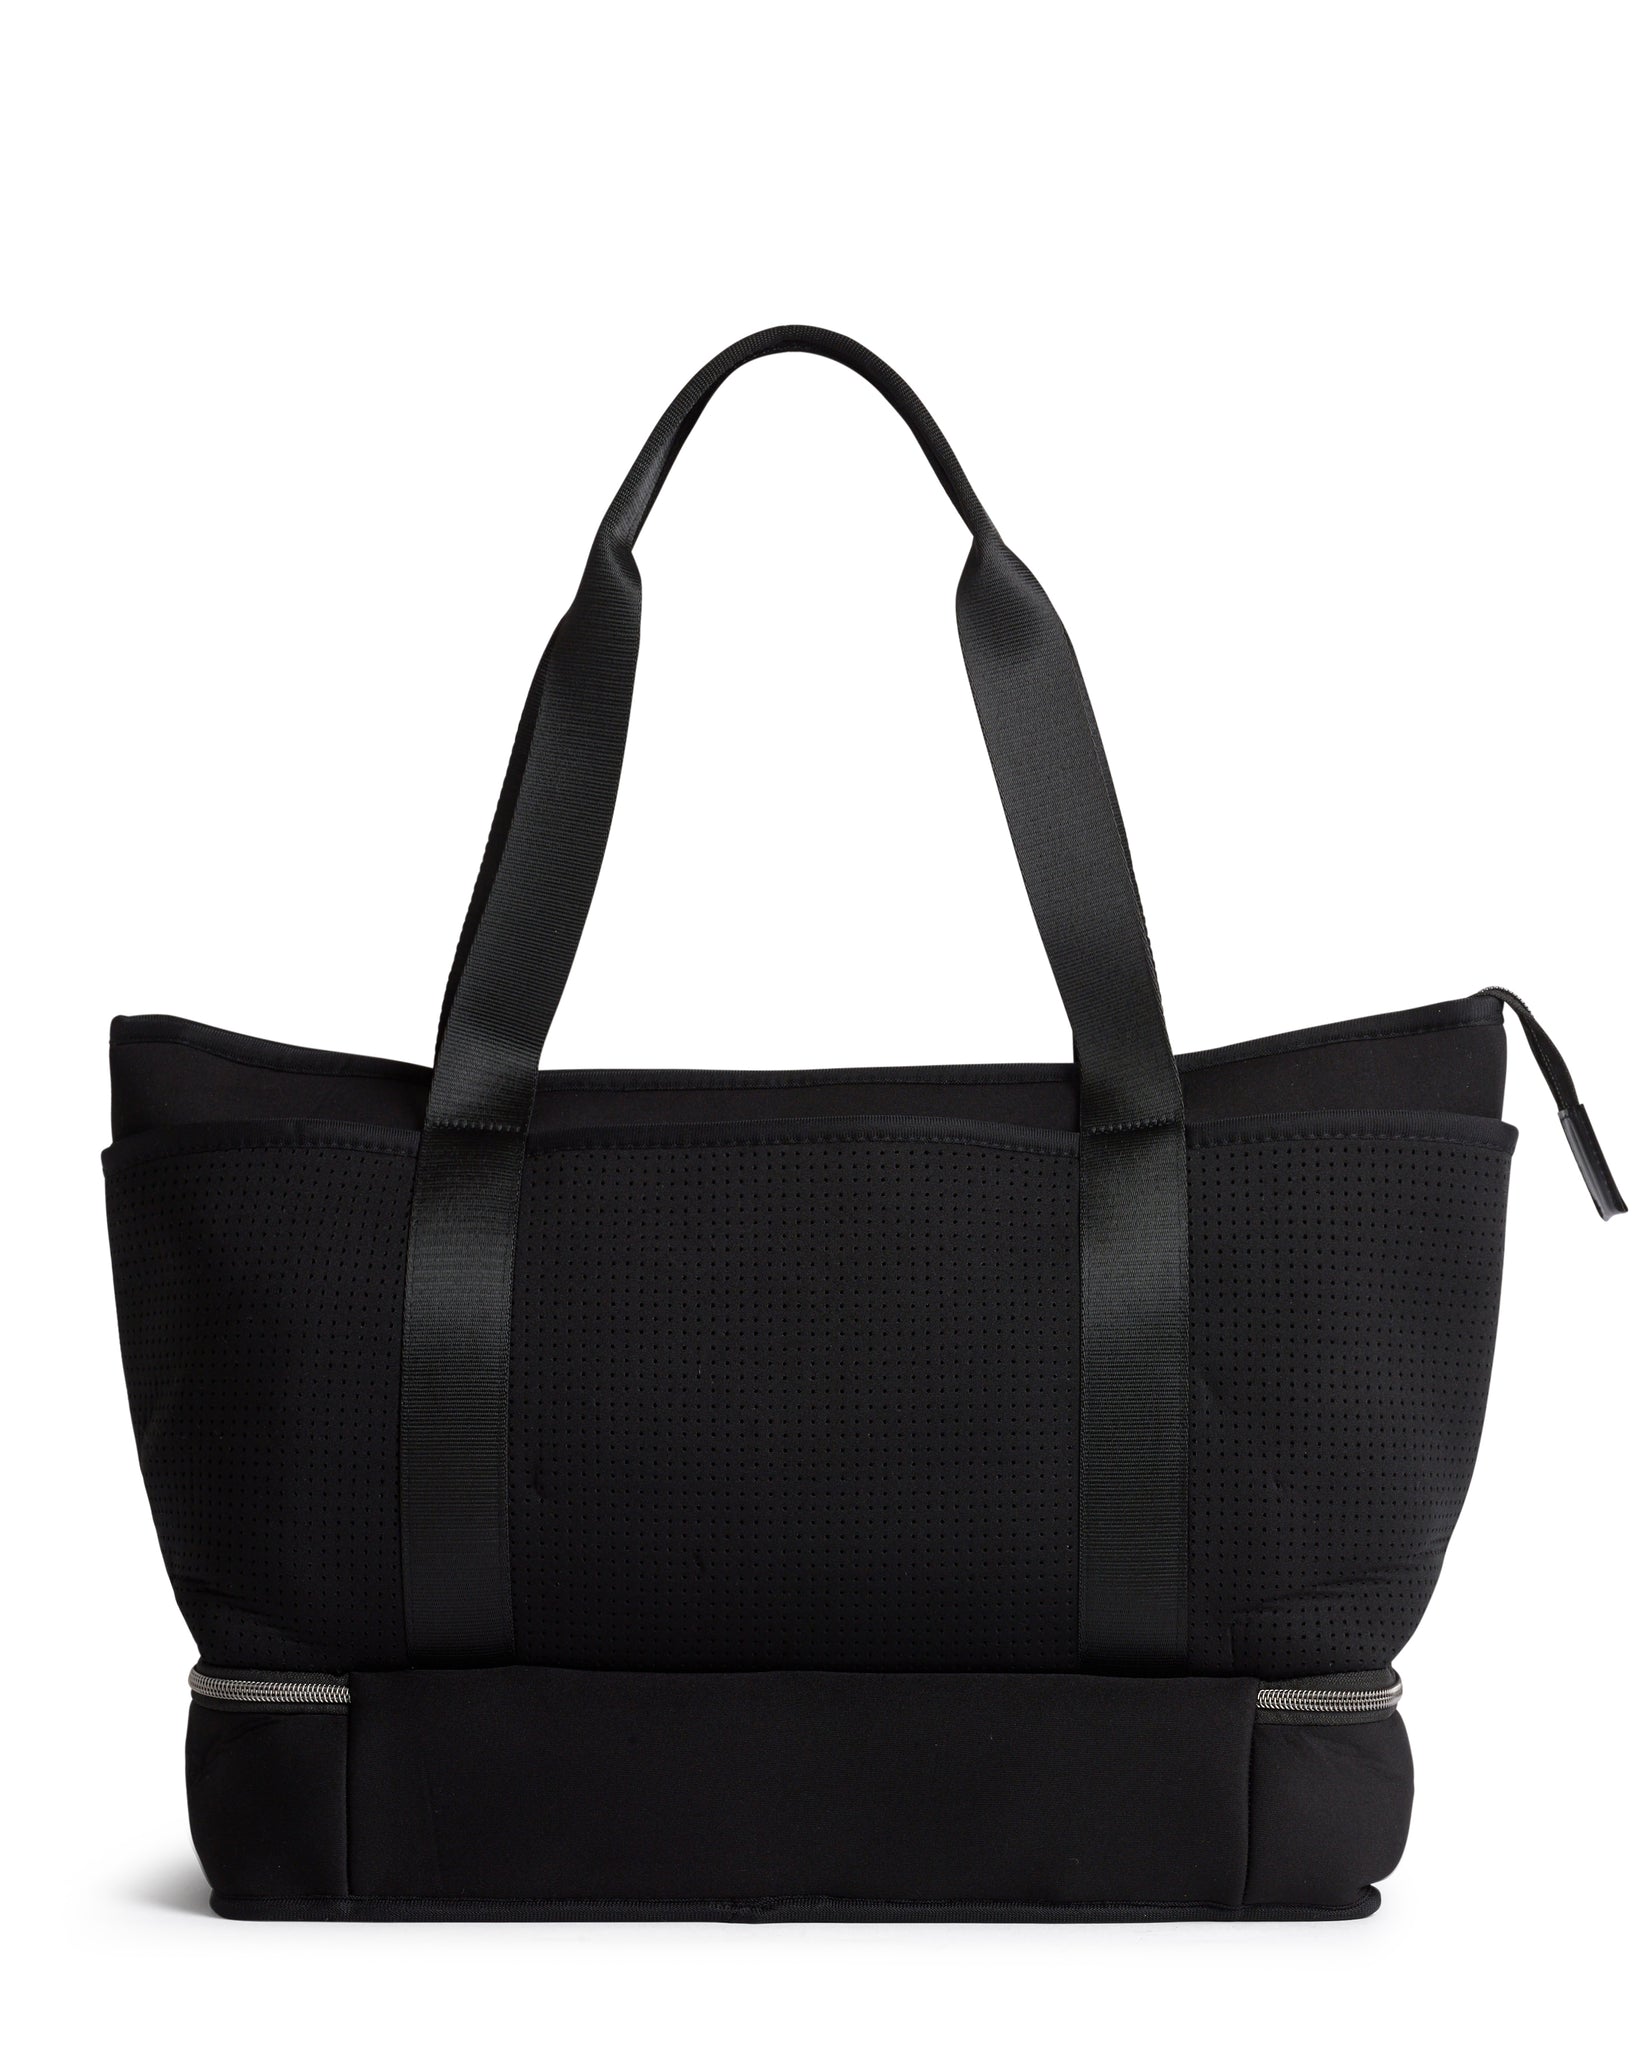 The Sunday Bag (BLACK) Neoprene Tote / Baby / Travel Bag